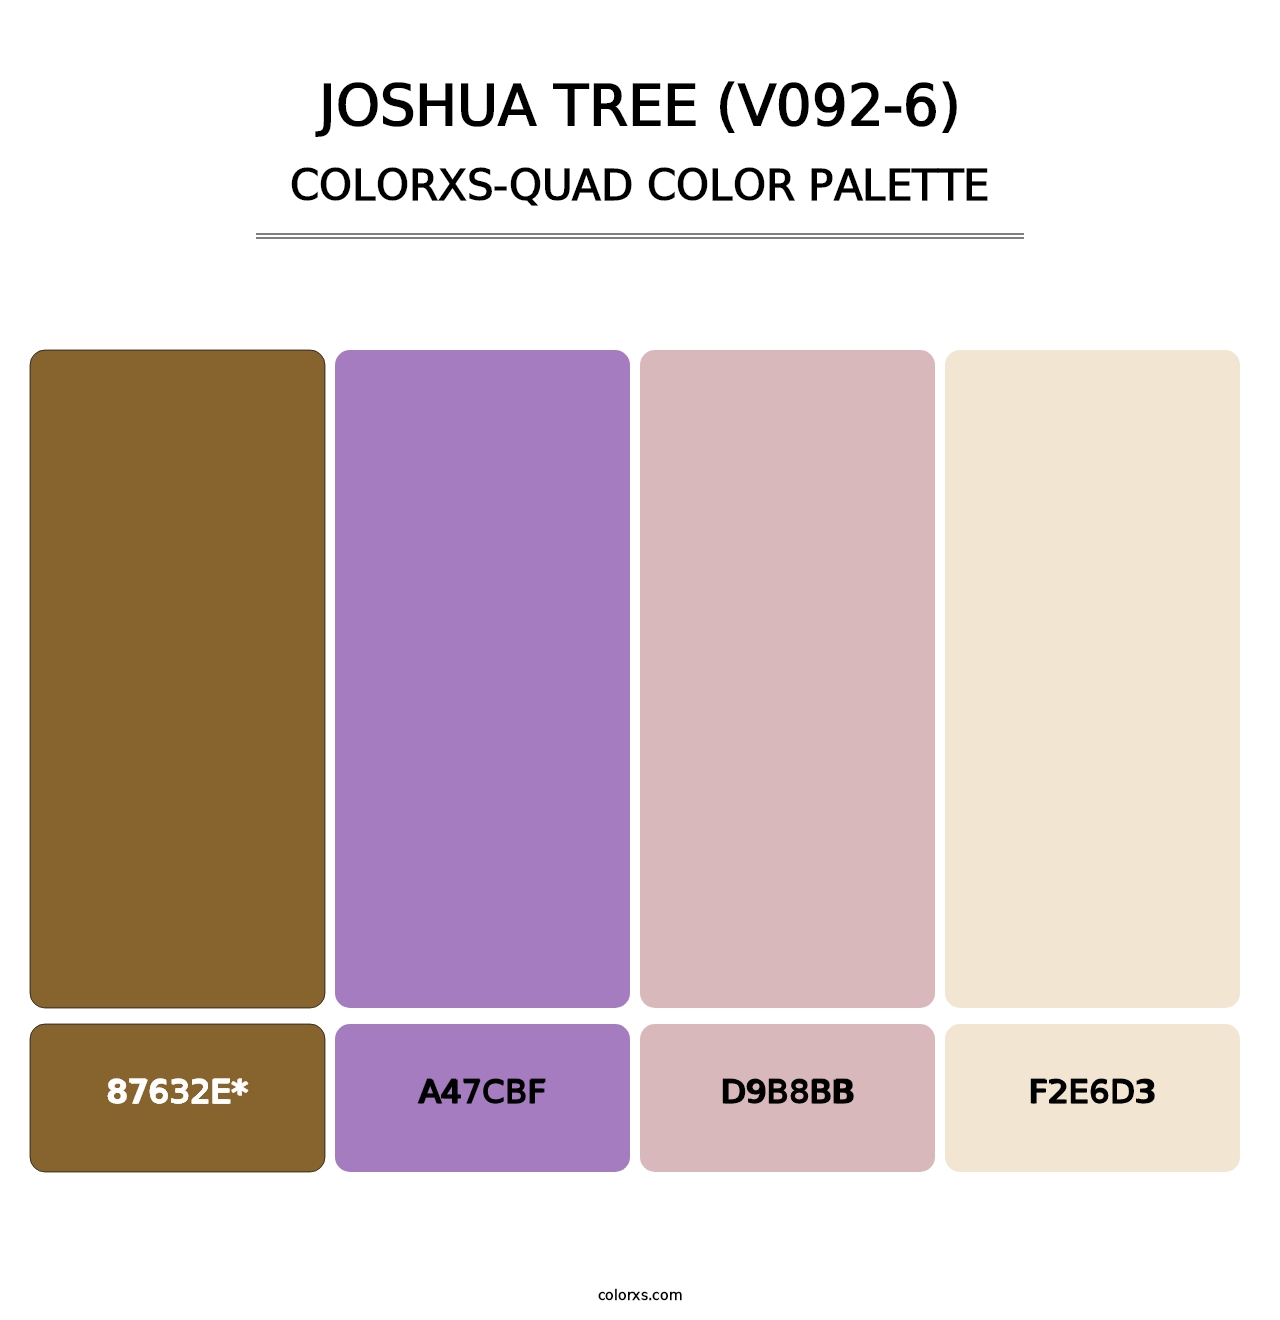 Joshua Tree (V092-6) - Colorxs Quad Palette